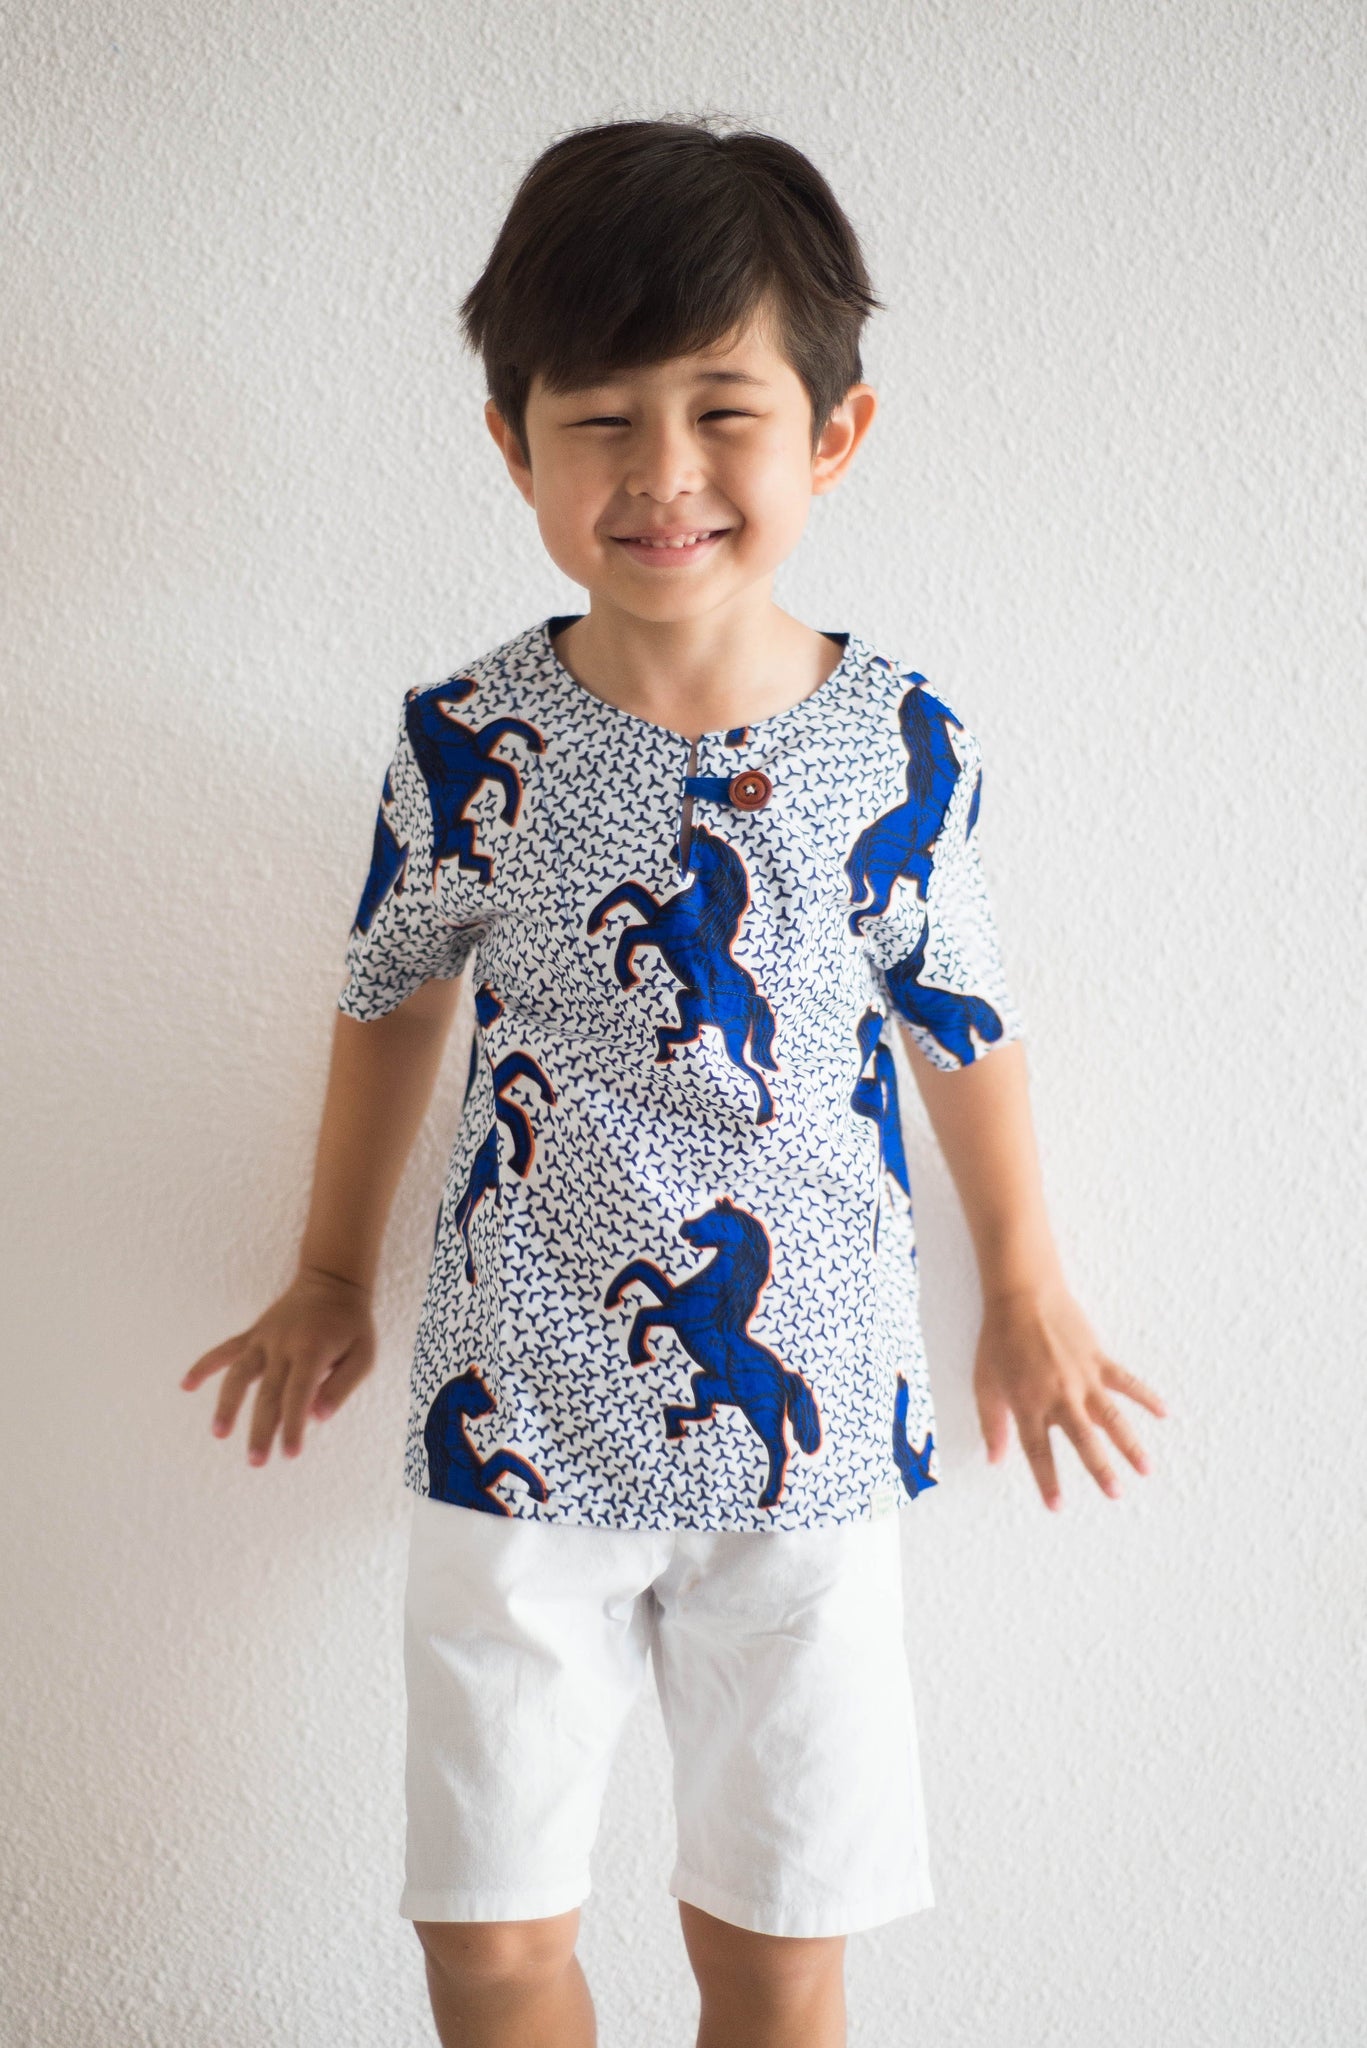 Children's designer clothing made with african wax batik